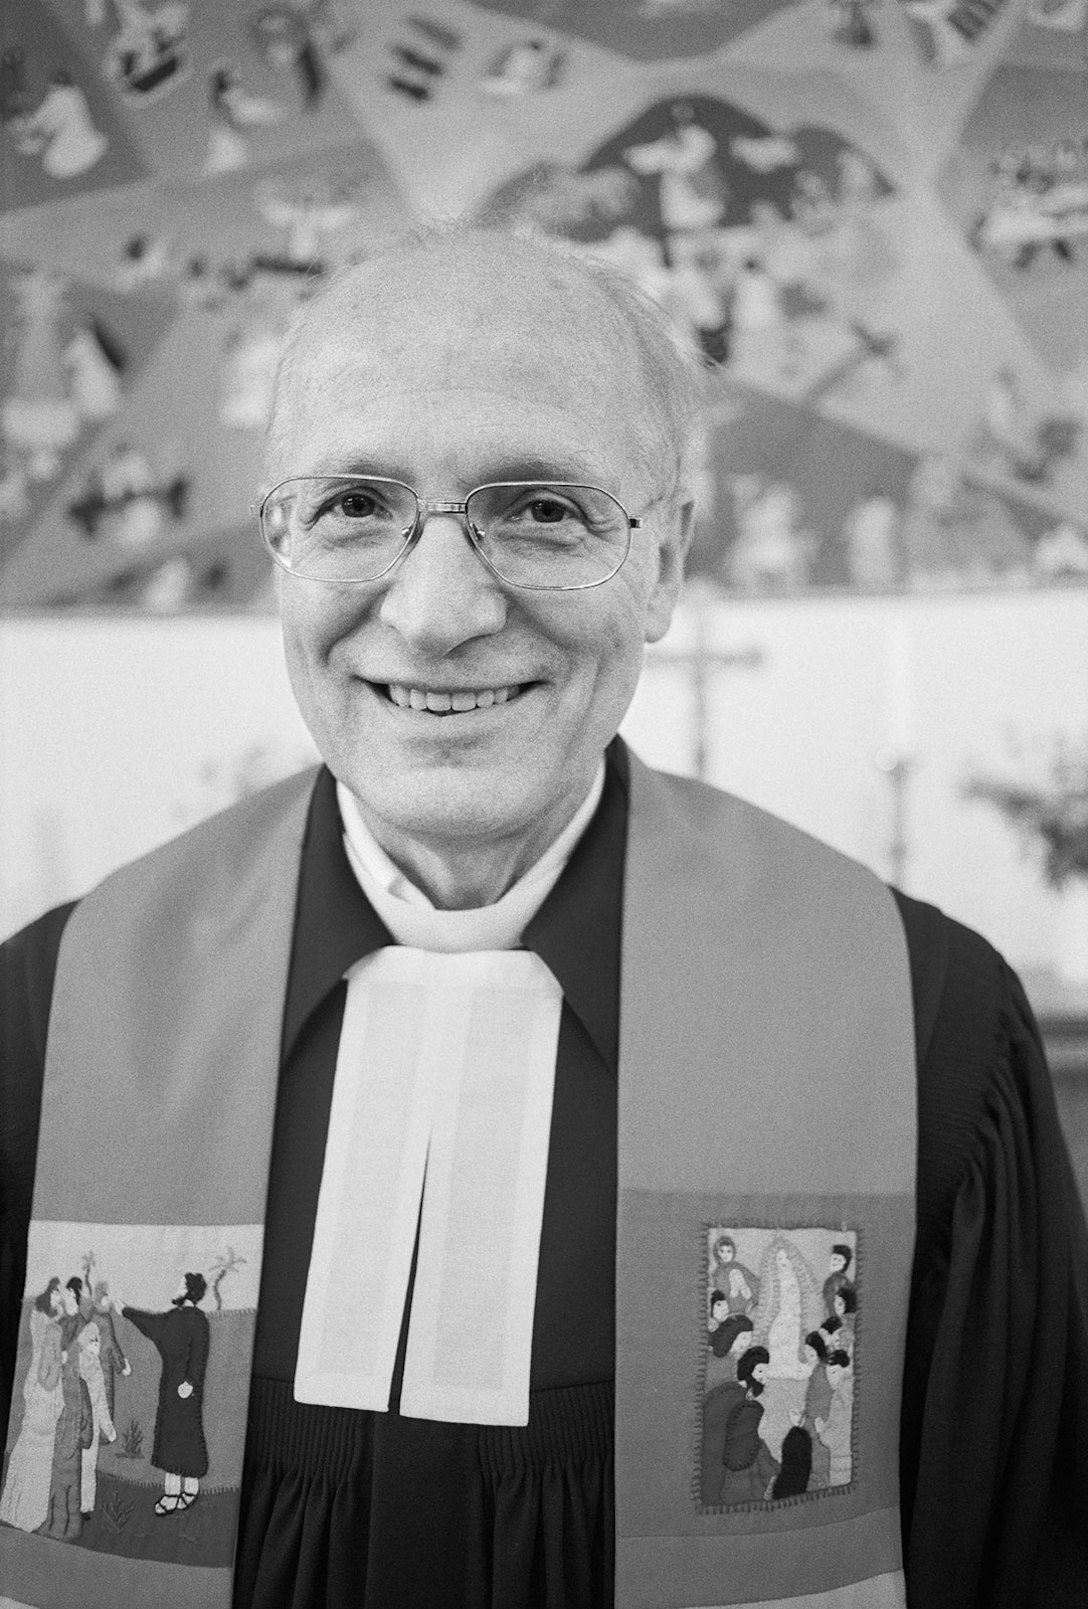 A photo of Pastor Gottfried Brezger